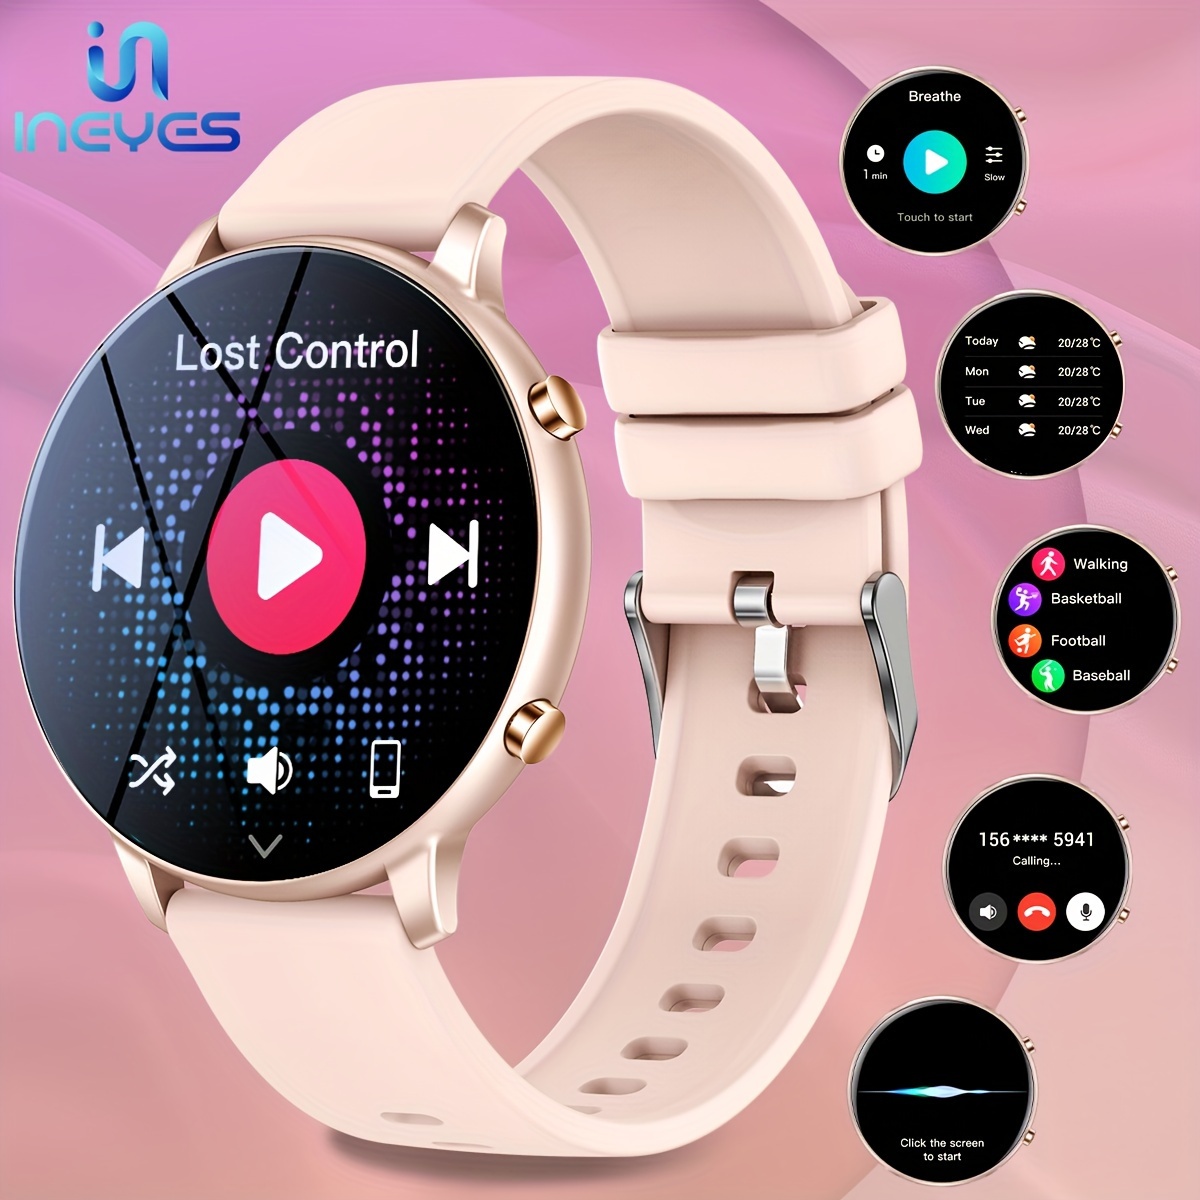 S8 Ultra Smart Watch Men Sports Watches Watch For Womens